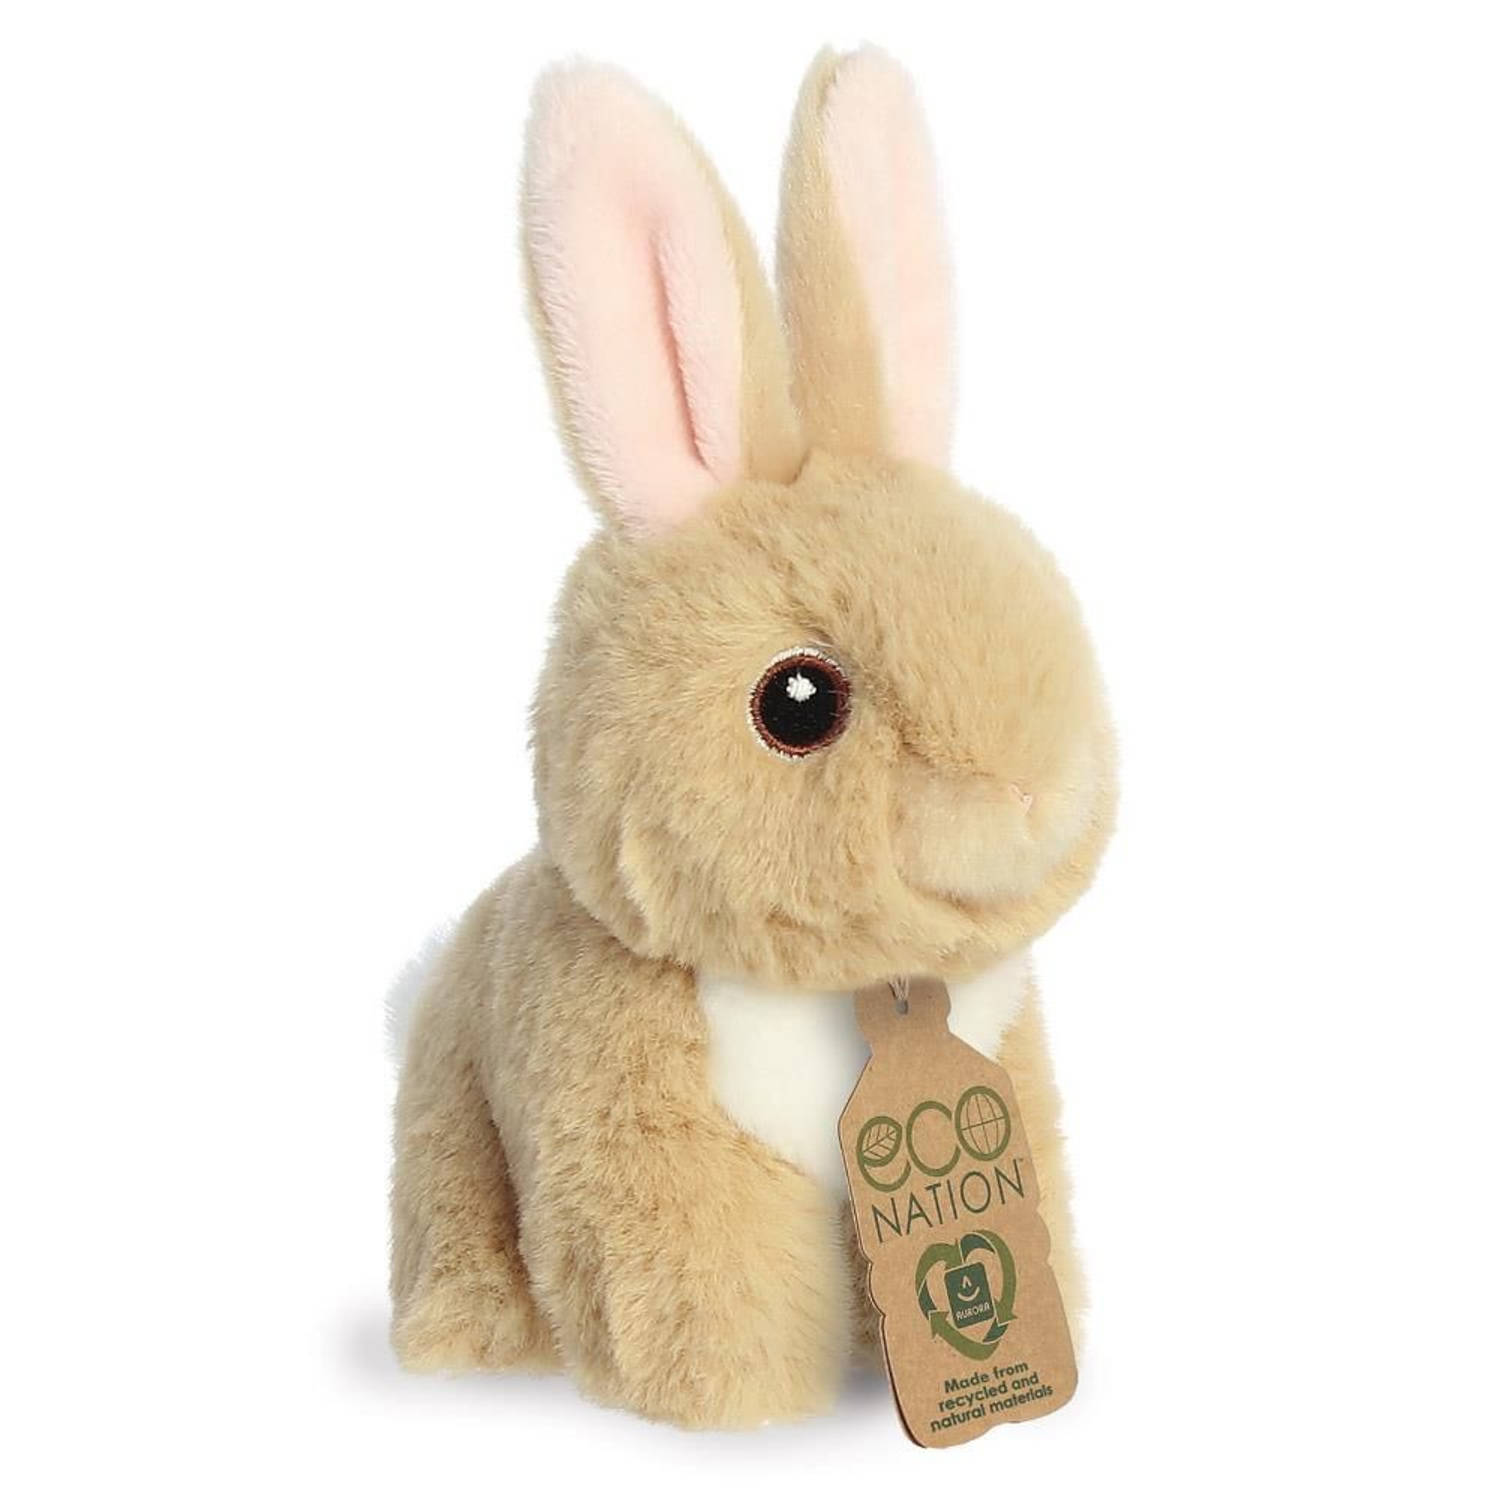 Pluche dieren knuffels konijn van 13 cm - Knuffeldieren konijnen speelgoed